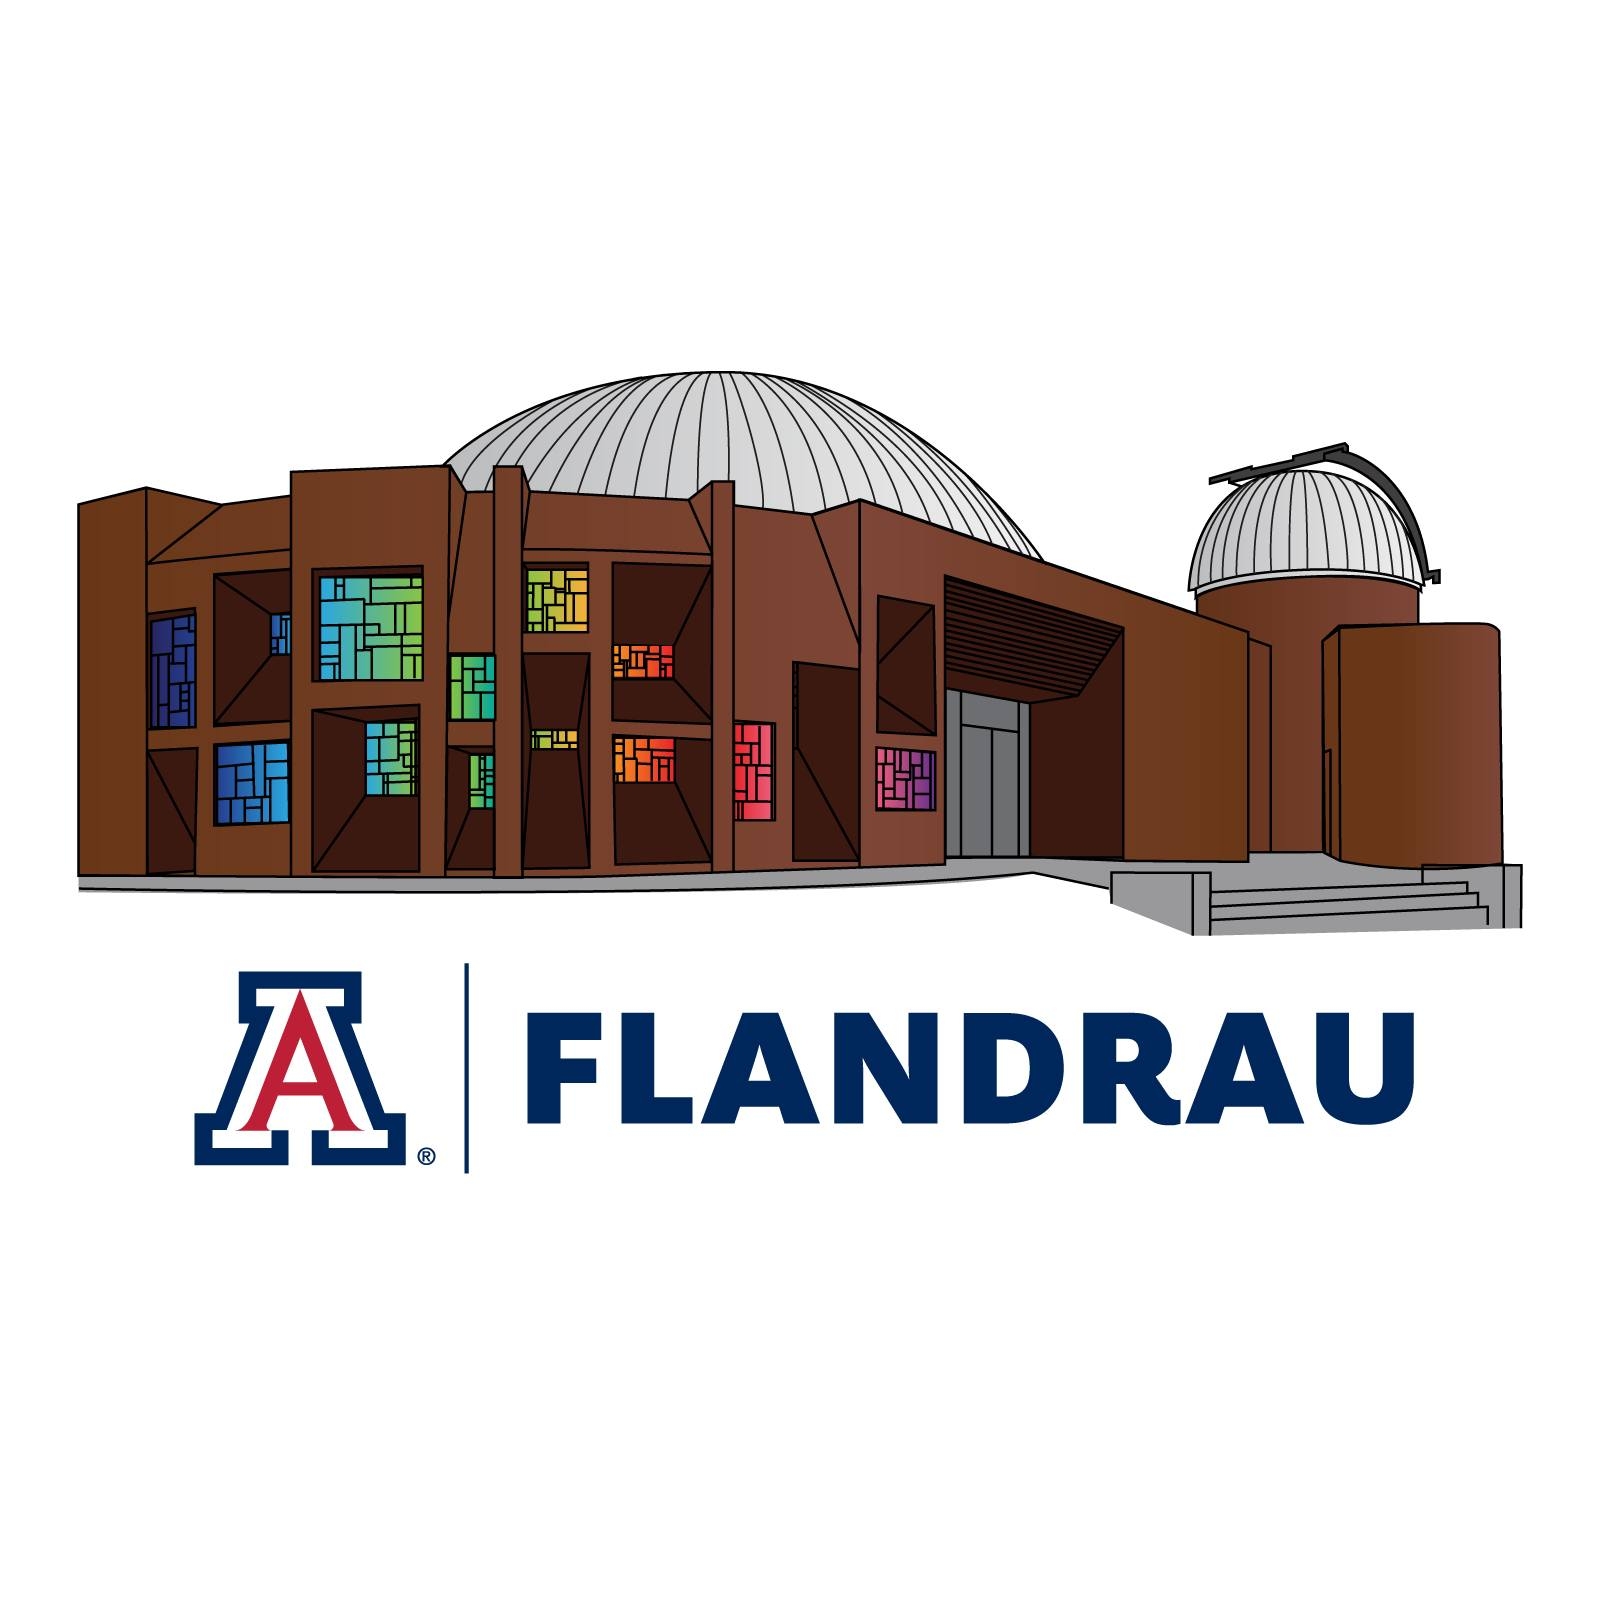 Flandrau Science Center and Planetarium|Zoo and Wildlife Sanctuary |Travel